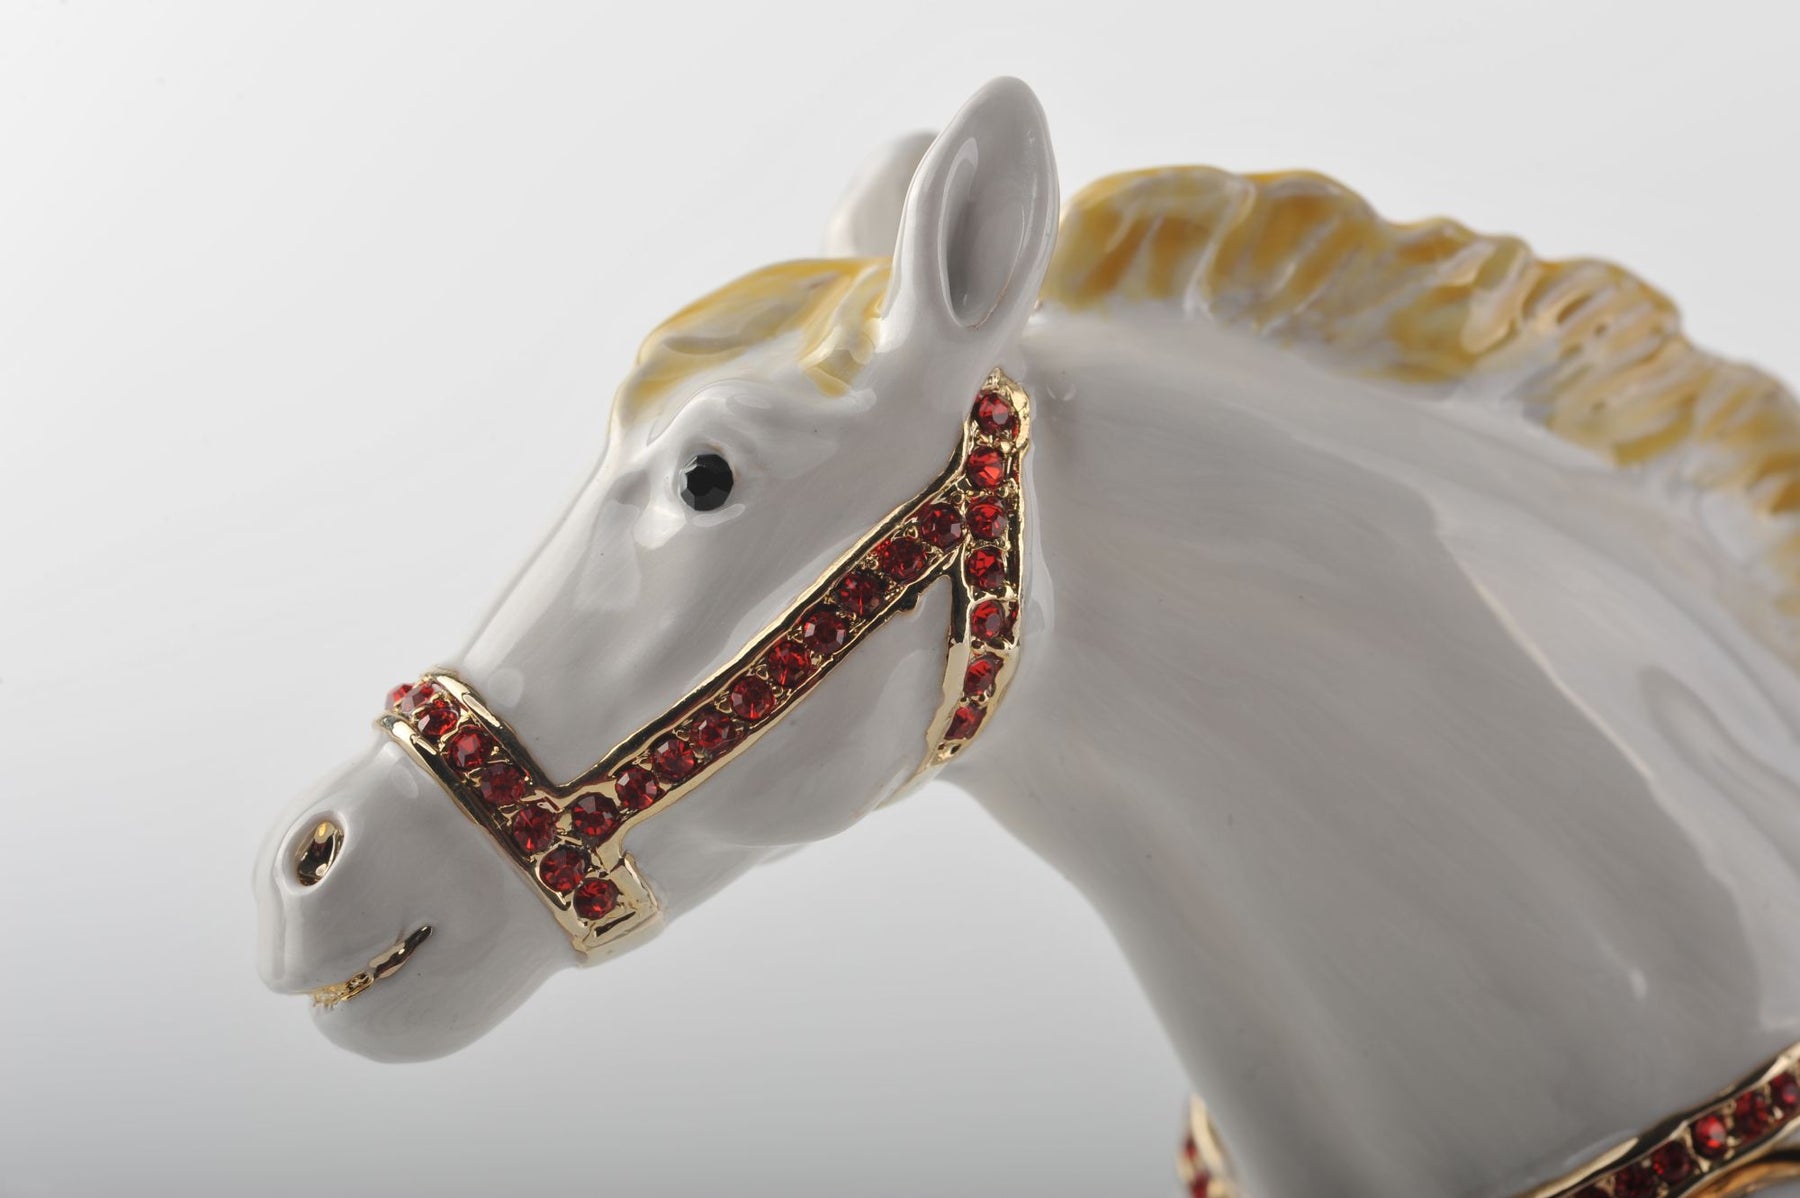 Keren Kopal White Horse with Crystal Saddle  137.50